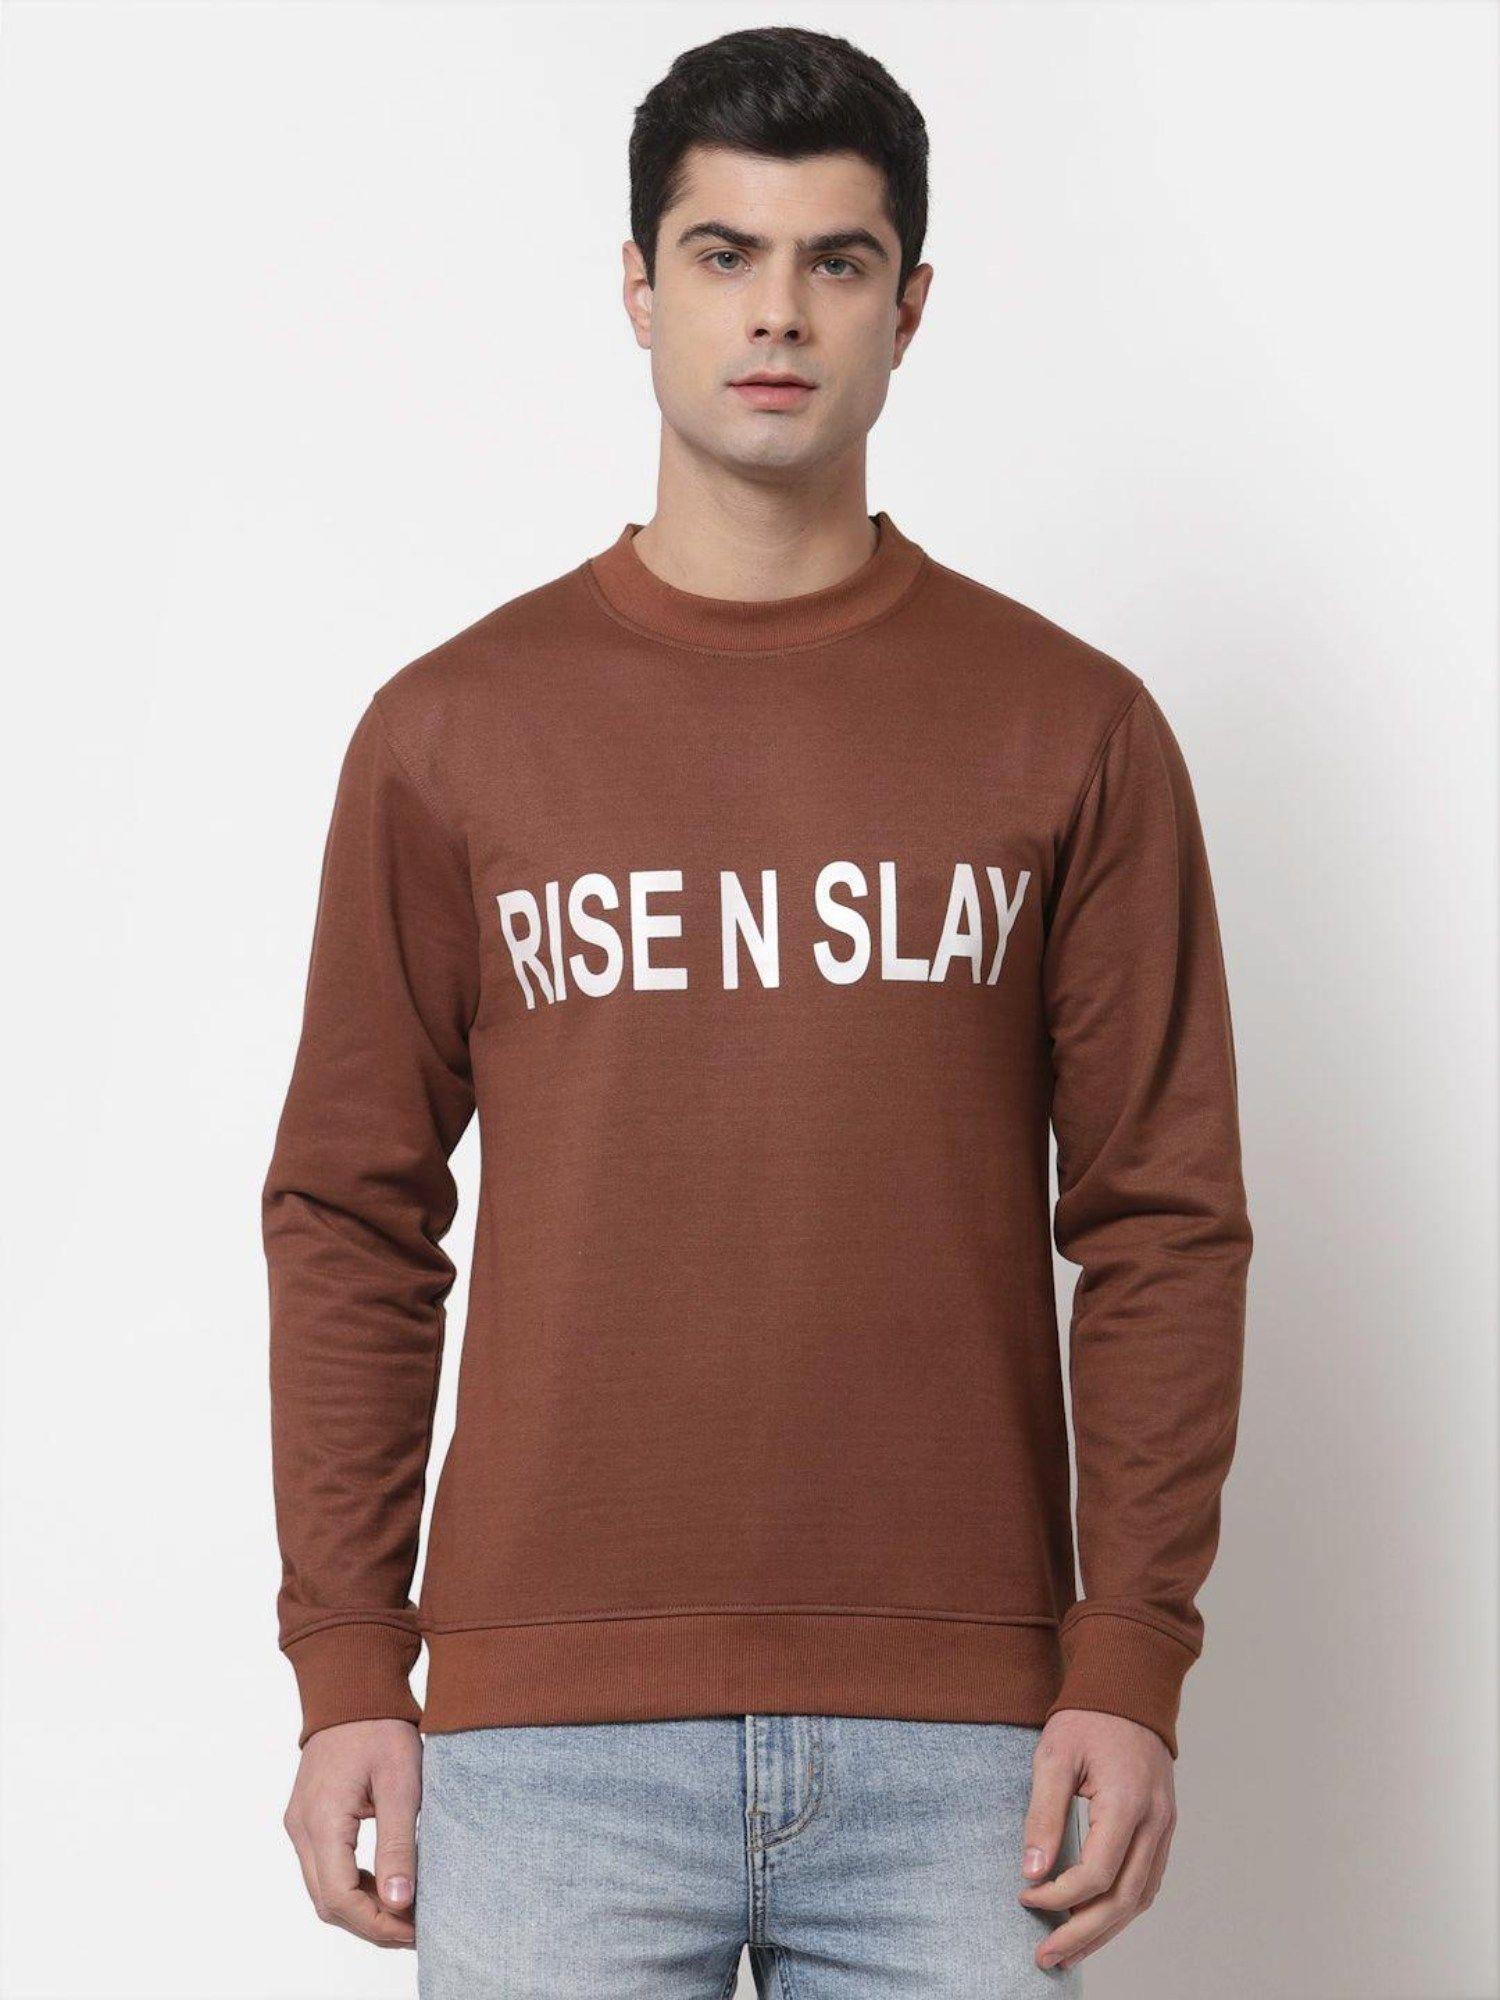 mens round neck typography sweatshirts